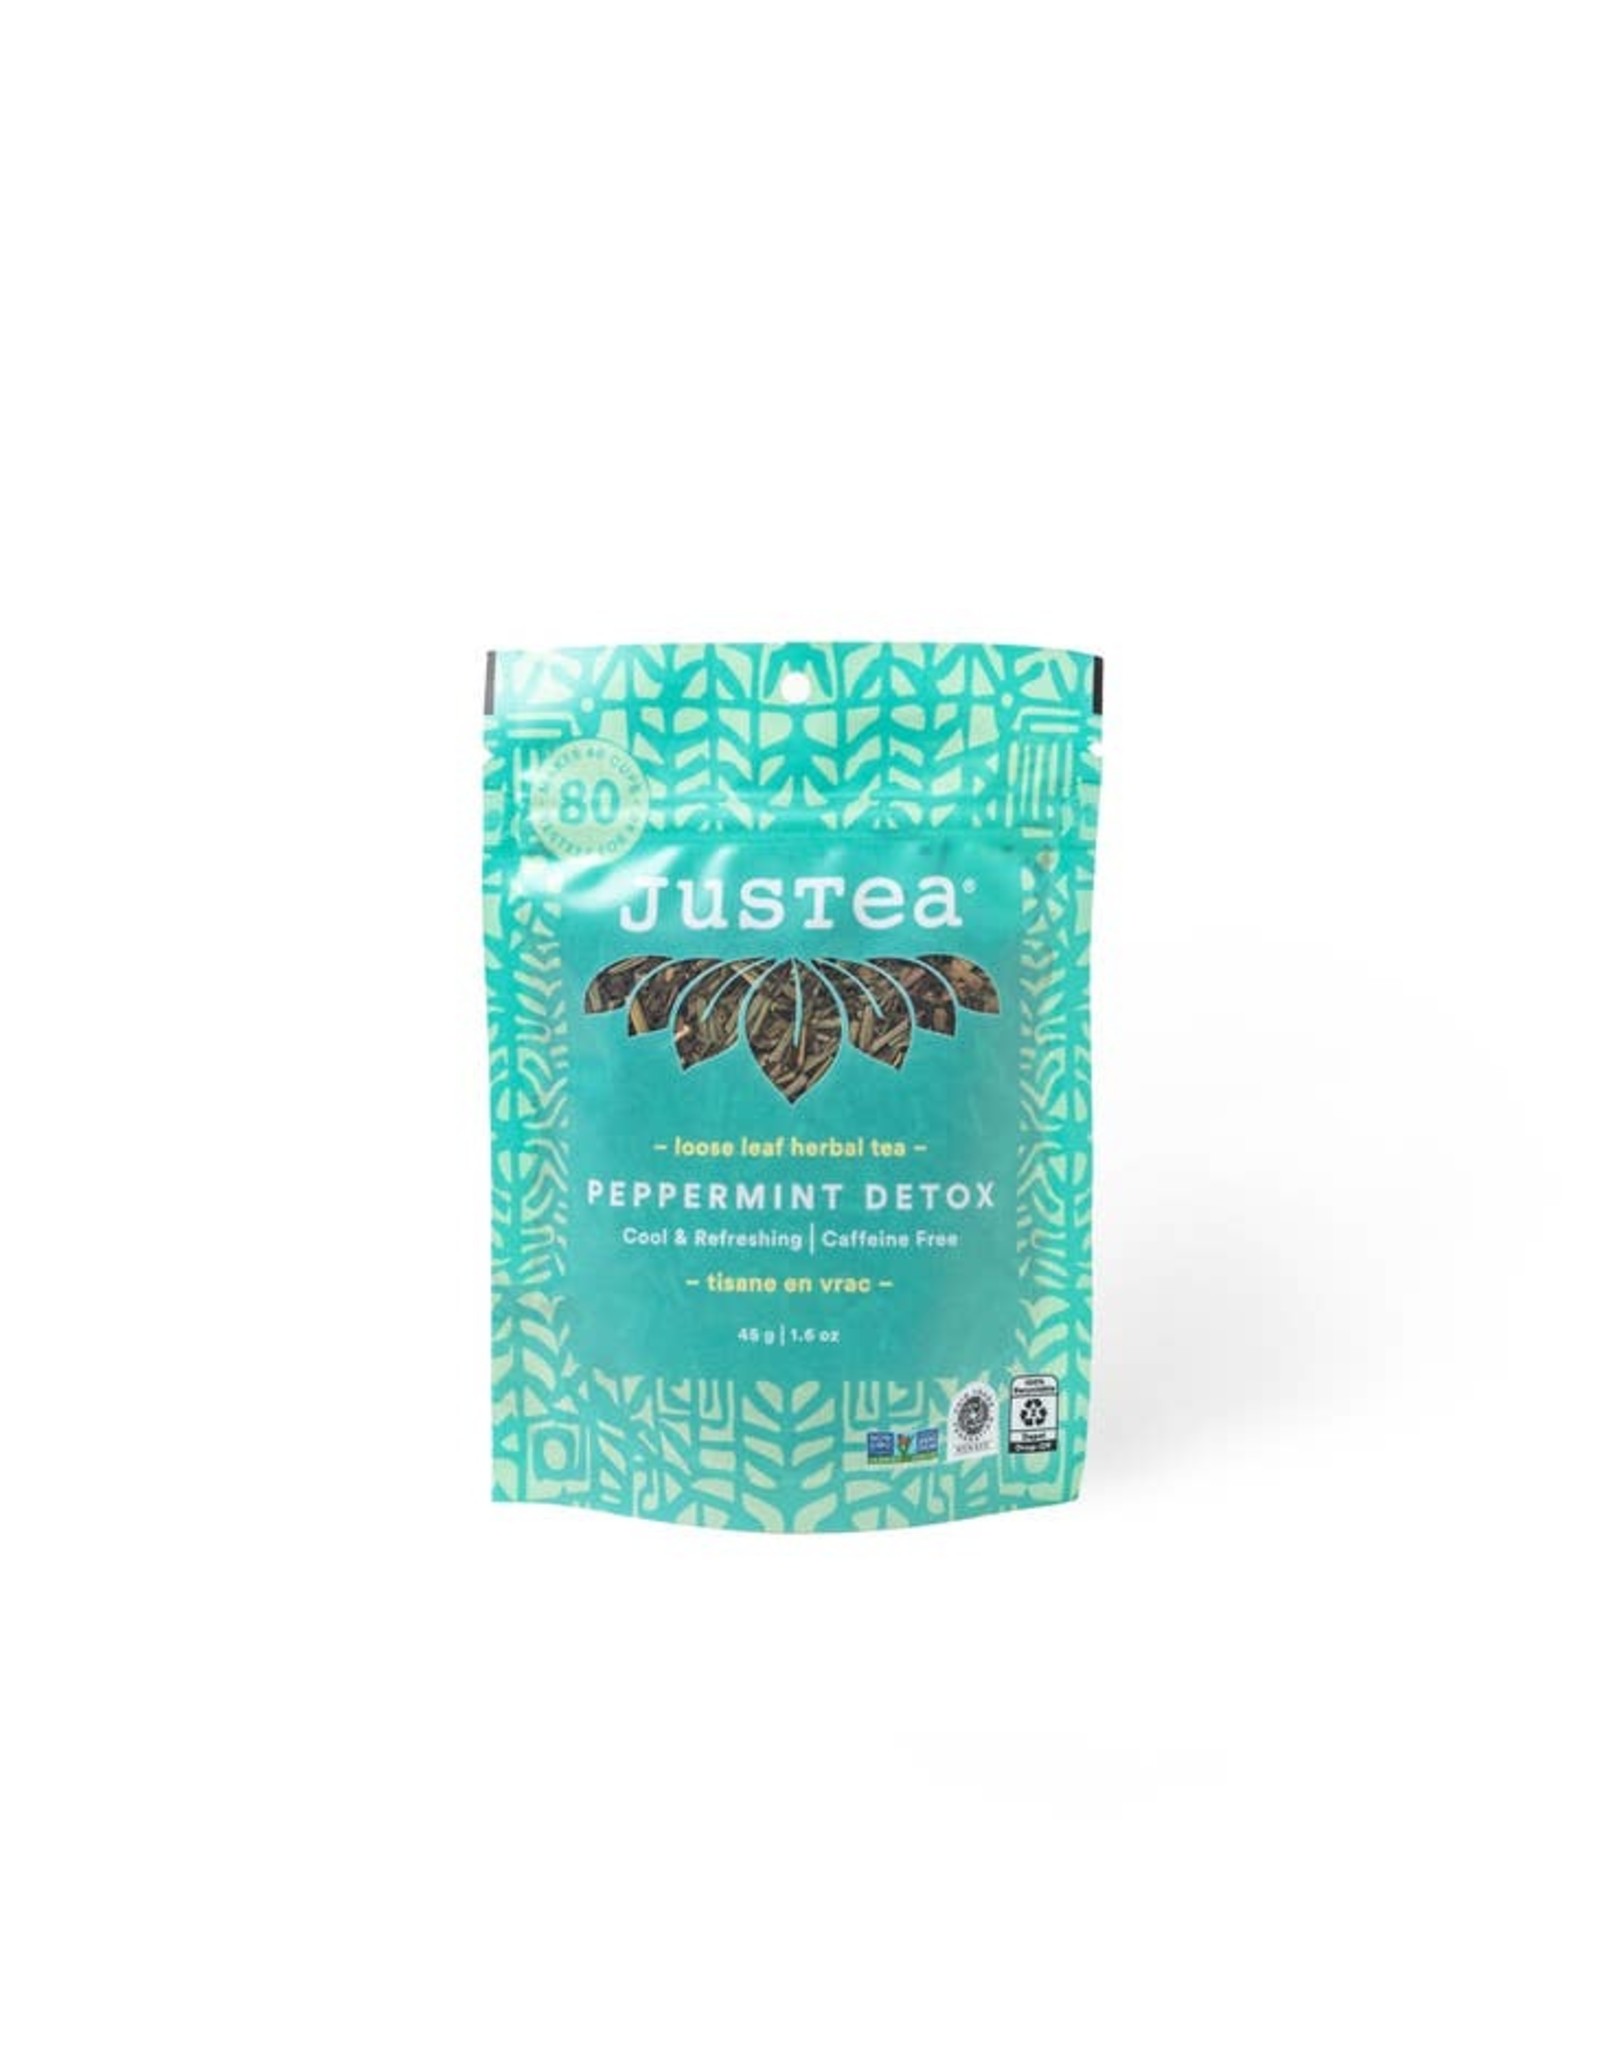 Kenya JusTea Peppermint Detox Loose Tea, 45g